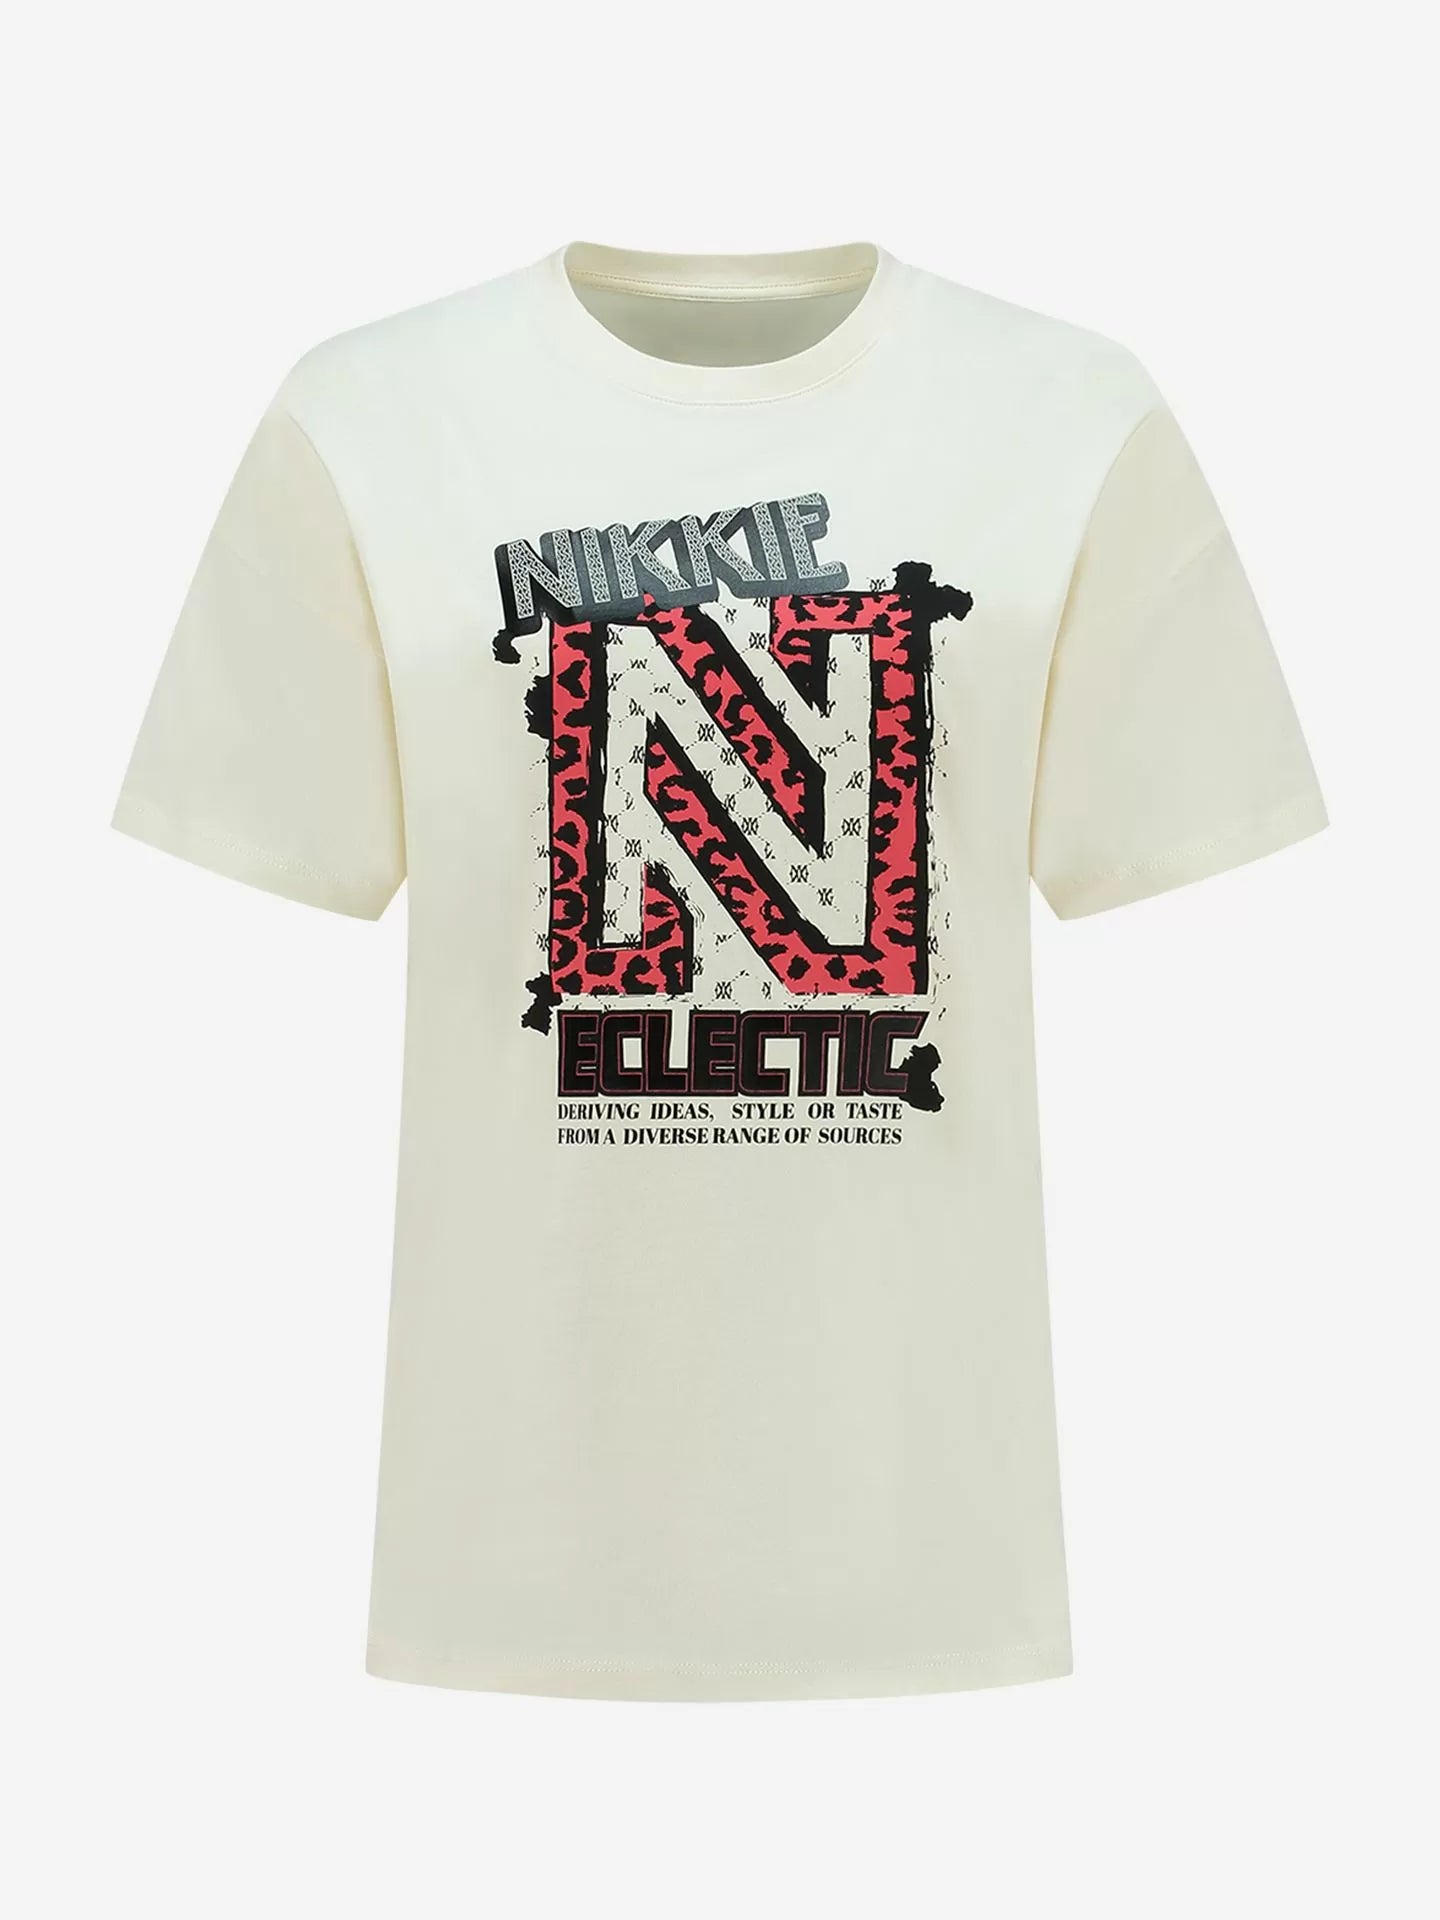 Nikkie eclectic T-Shirt - Pearl